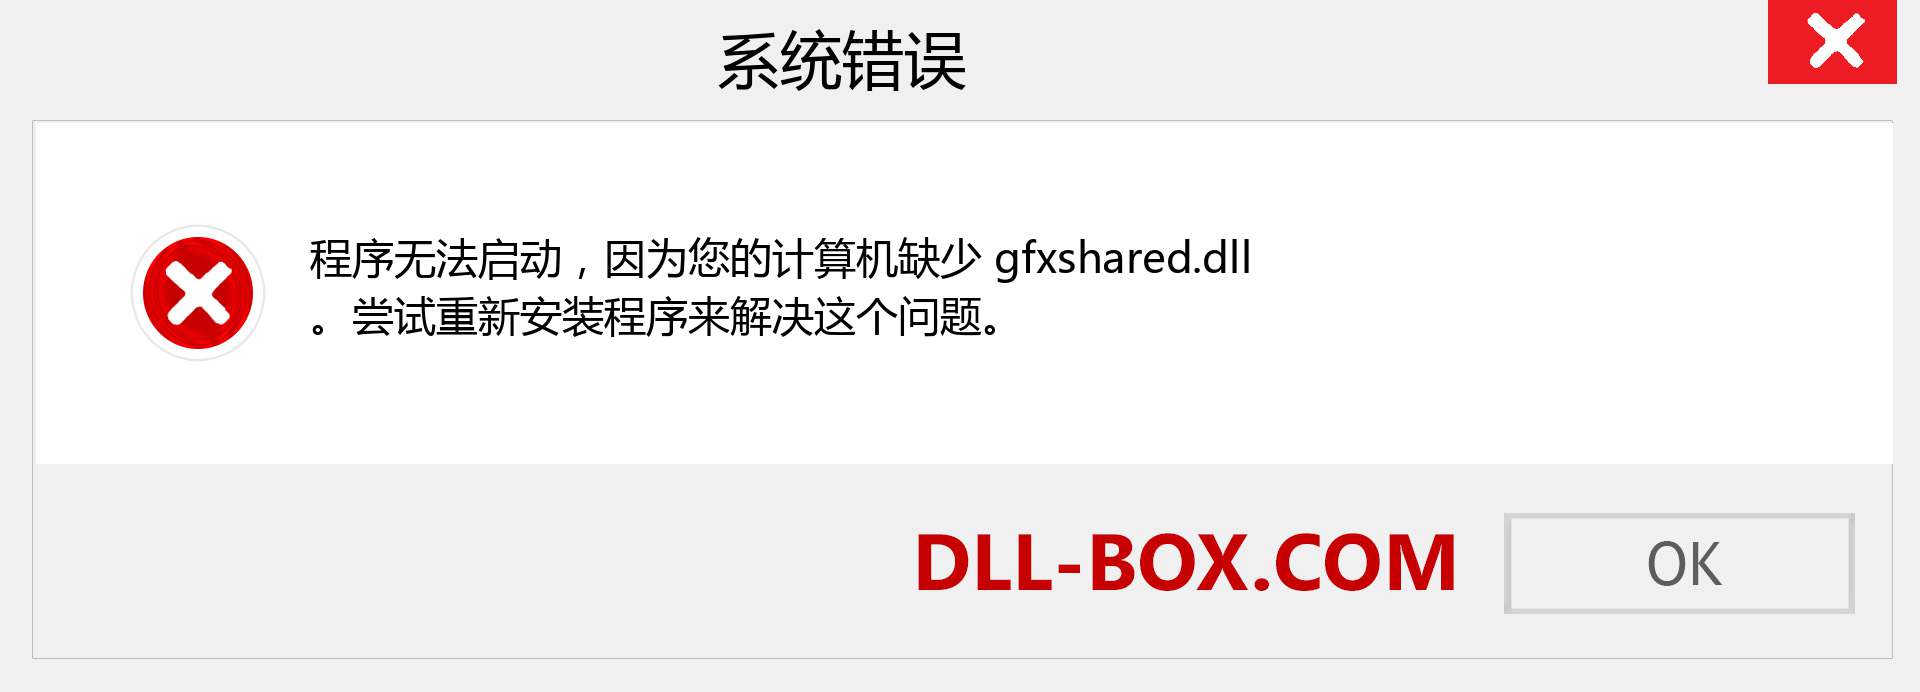 gfxshared.dll 文件丢失？。 适用于 Windows 7、8、10 的下载 - 修复 Windows、照片、图像上的 gfxshared dll 丢失错误